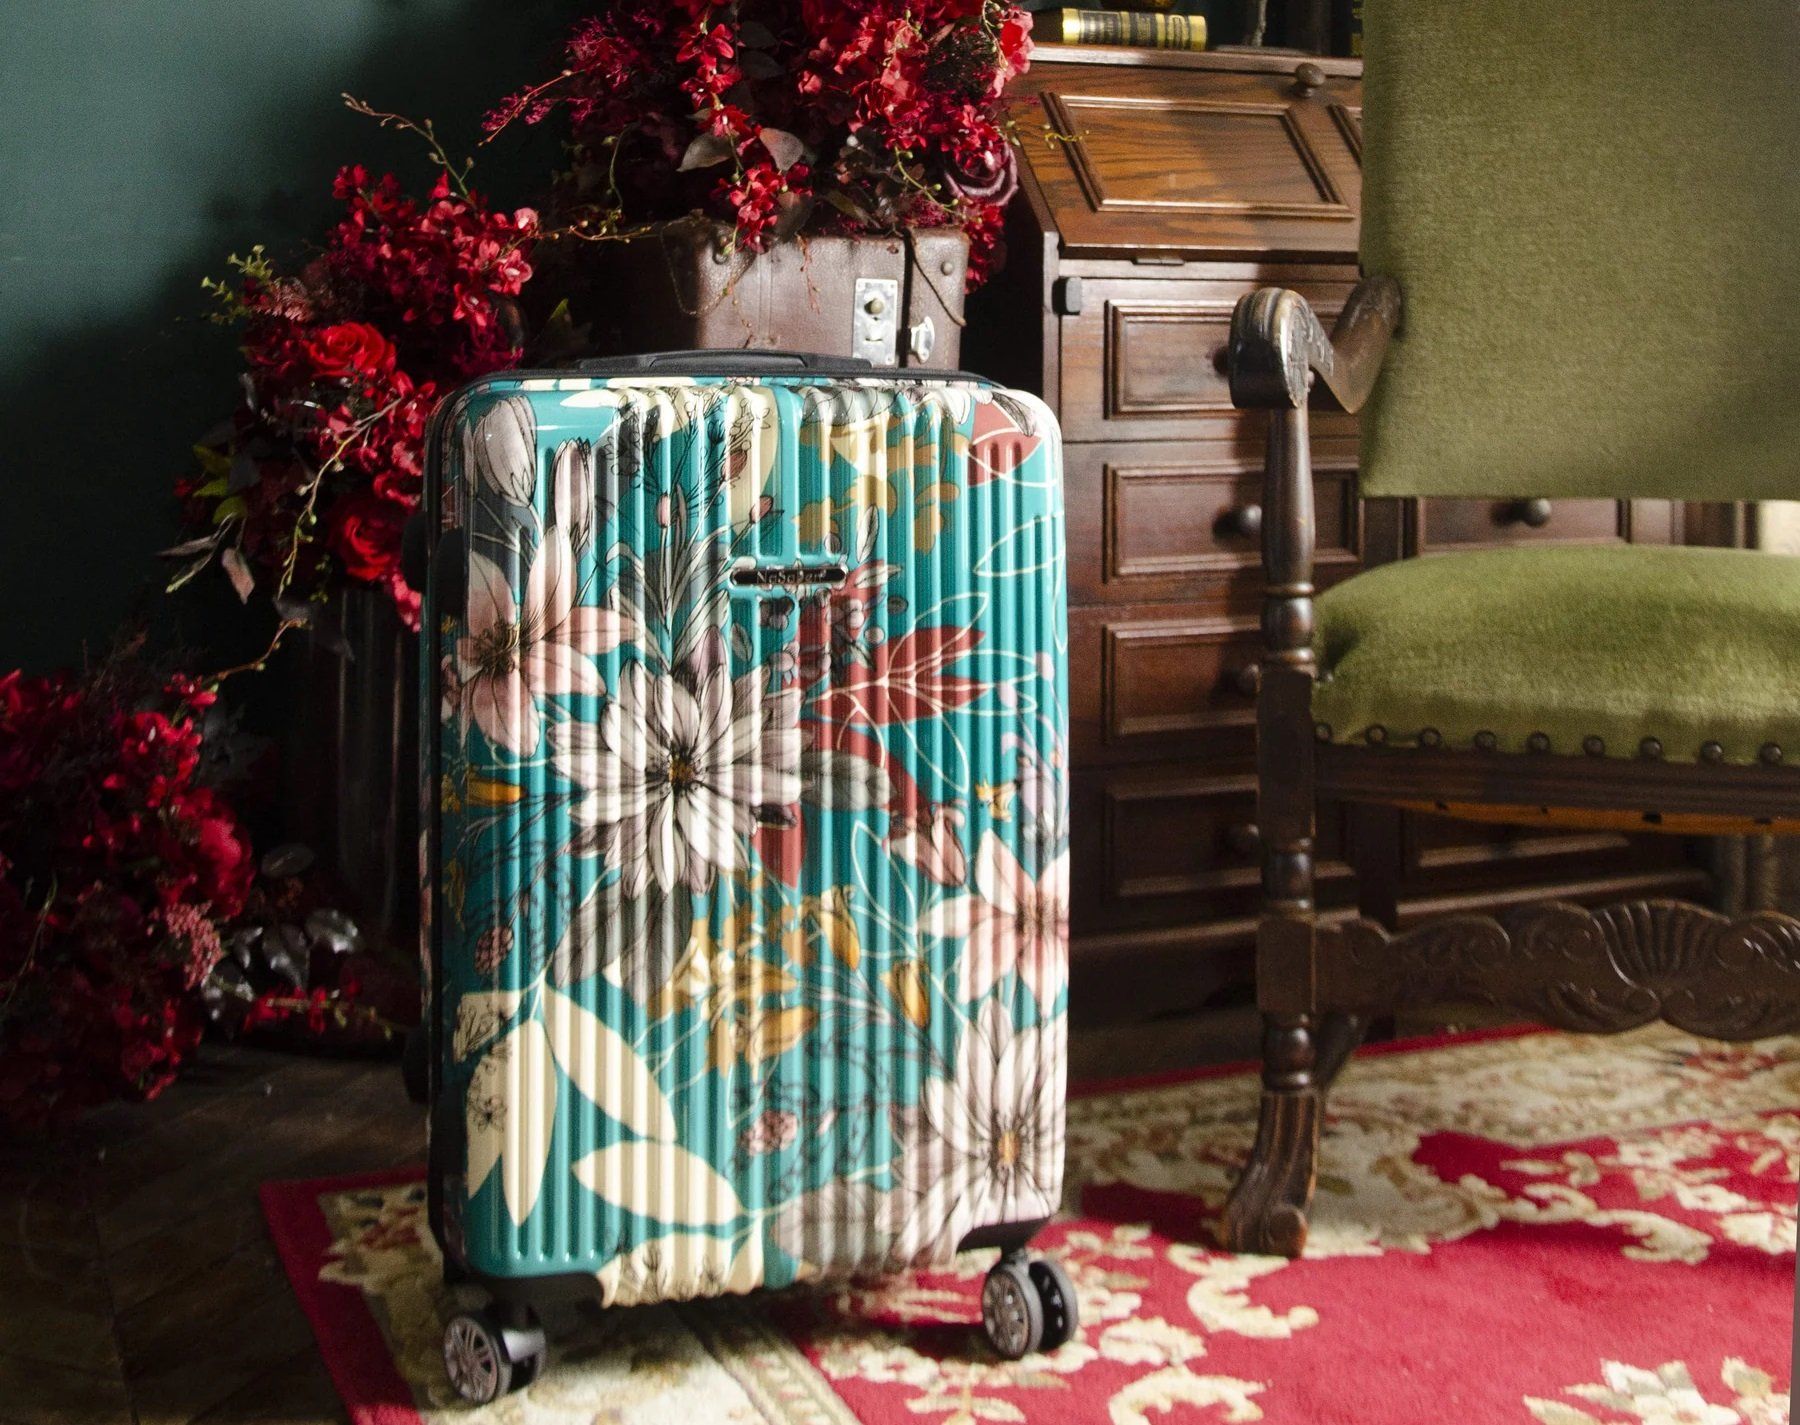 NaSaDen 納莎登行李箱品牌是連短今都愛的行李箱品牌